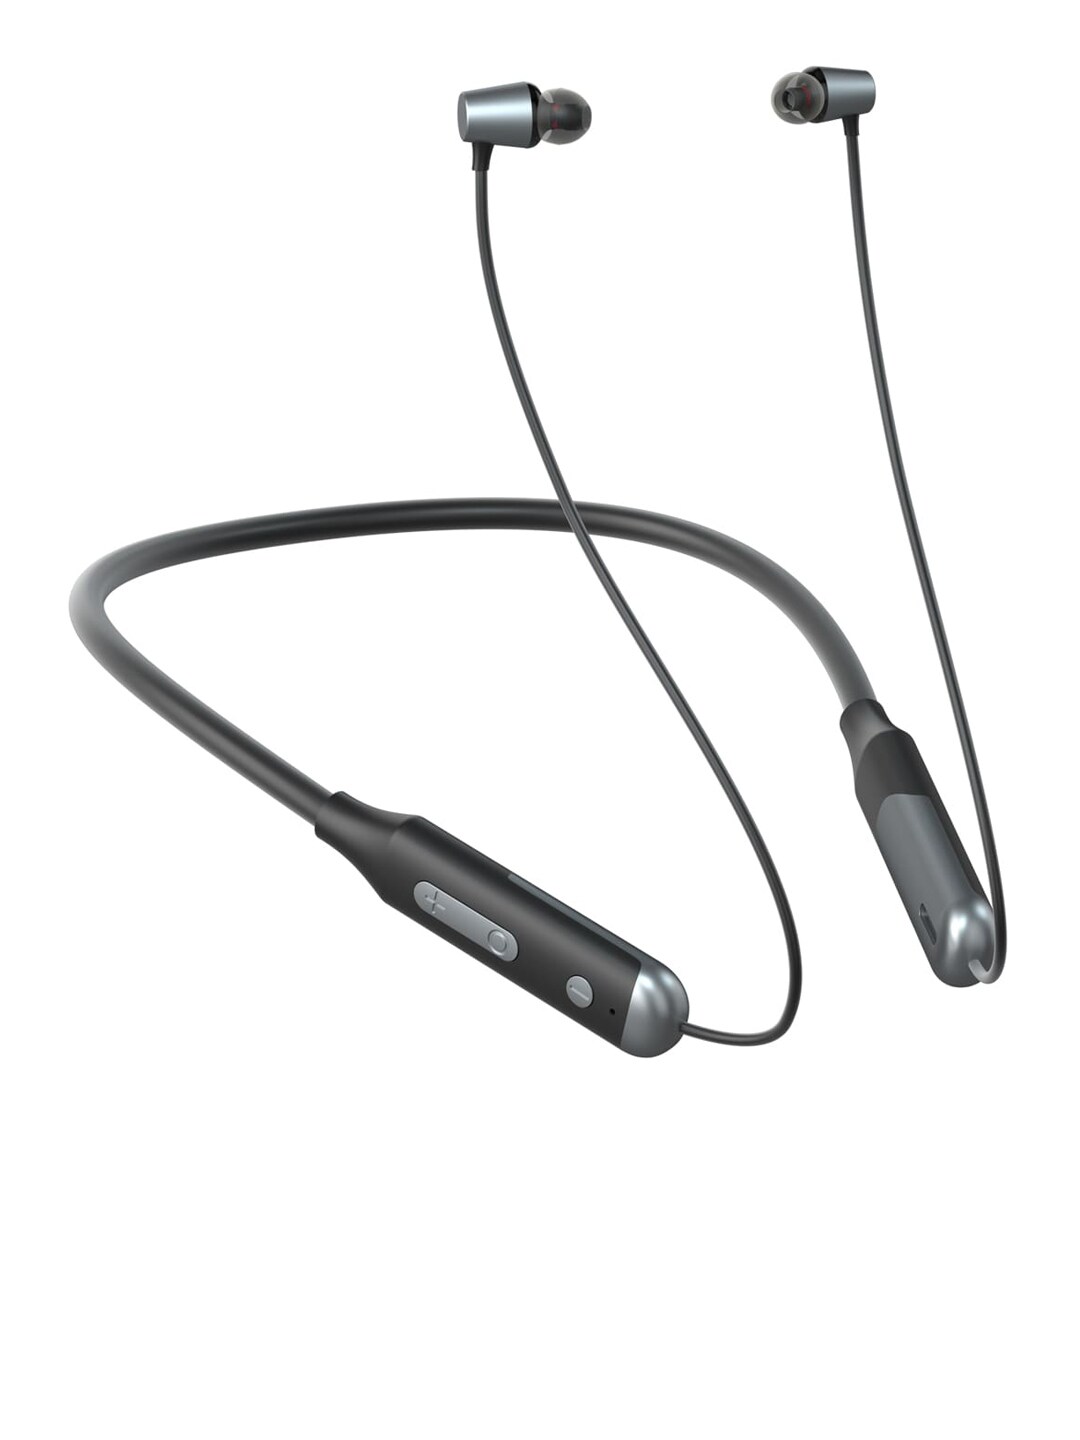 GIZMORE Unisex Black Dual Tone In-Ear Giz MN223 Bluetooth Wireless Earphones Price in India